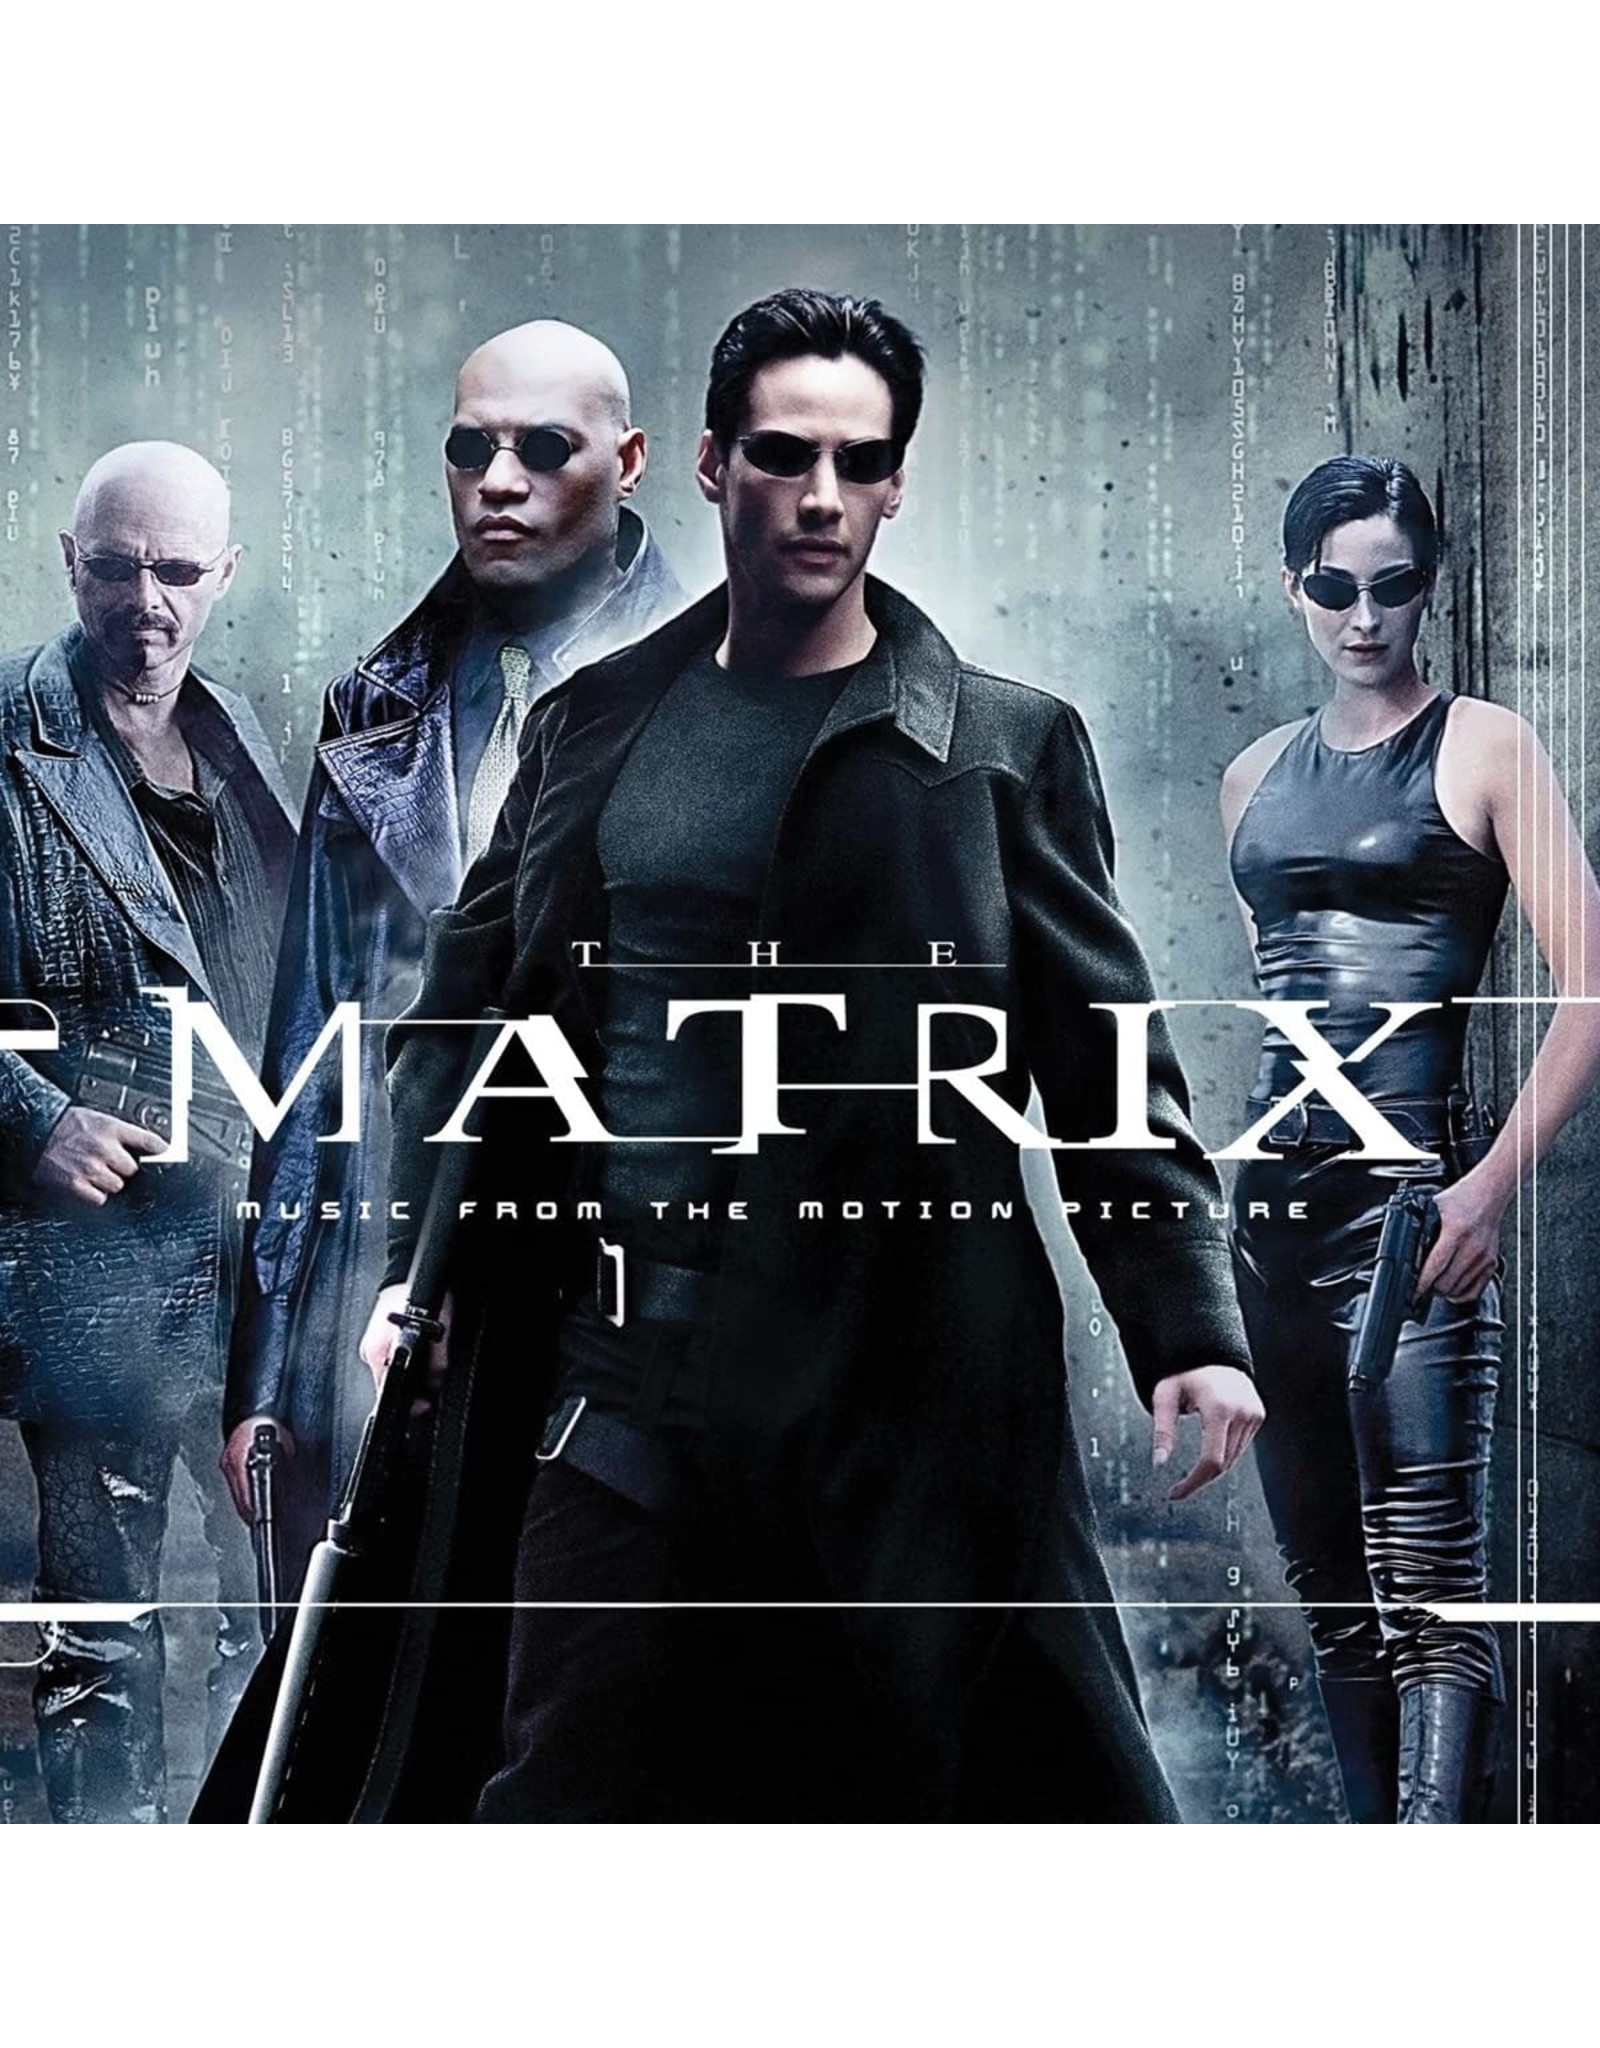 Various - Matrix (Music From The Film) [Red / Blue Swirl Vinyl]